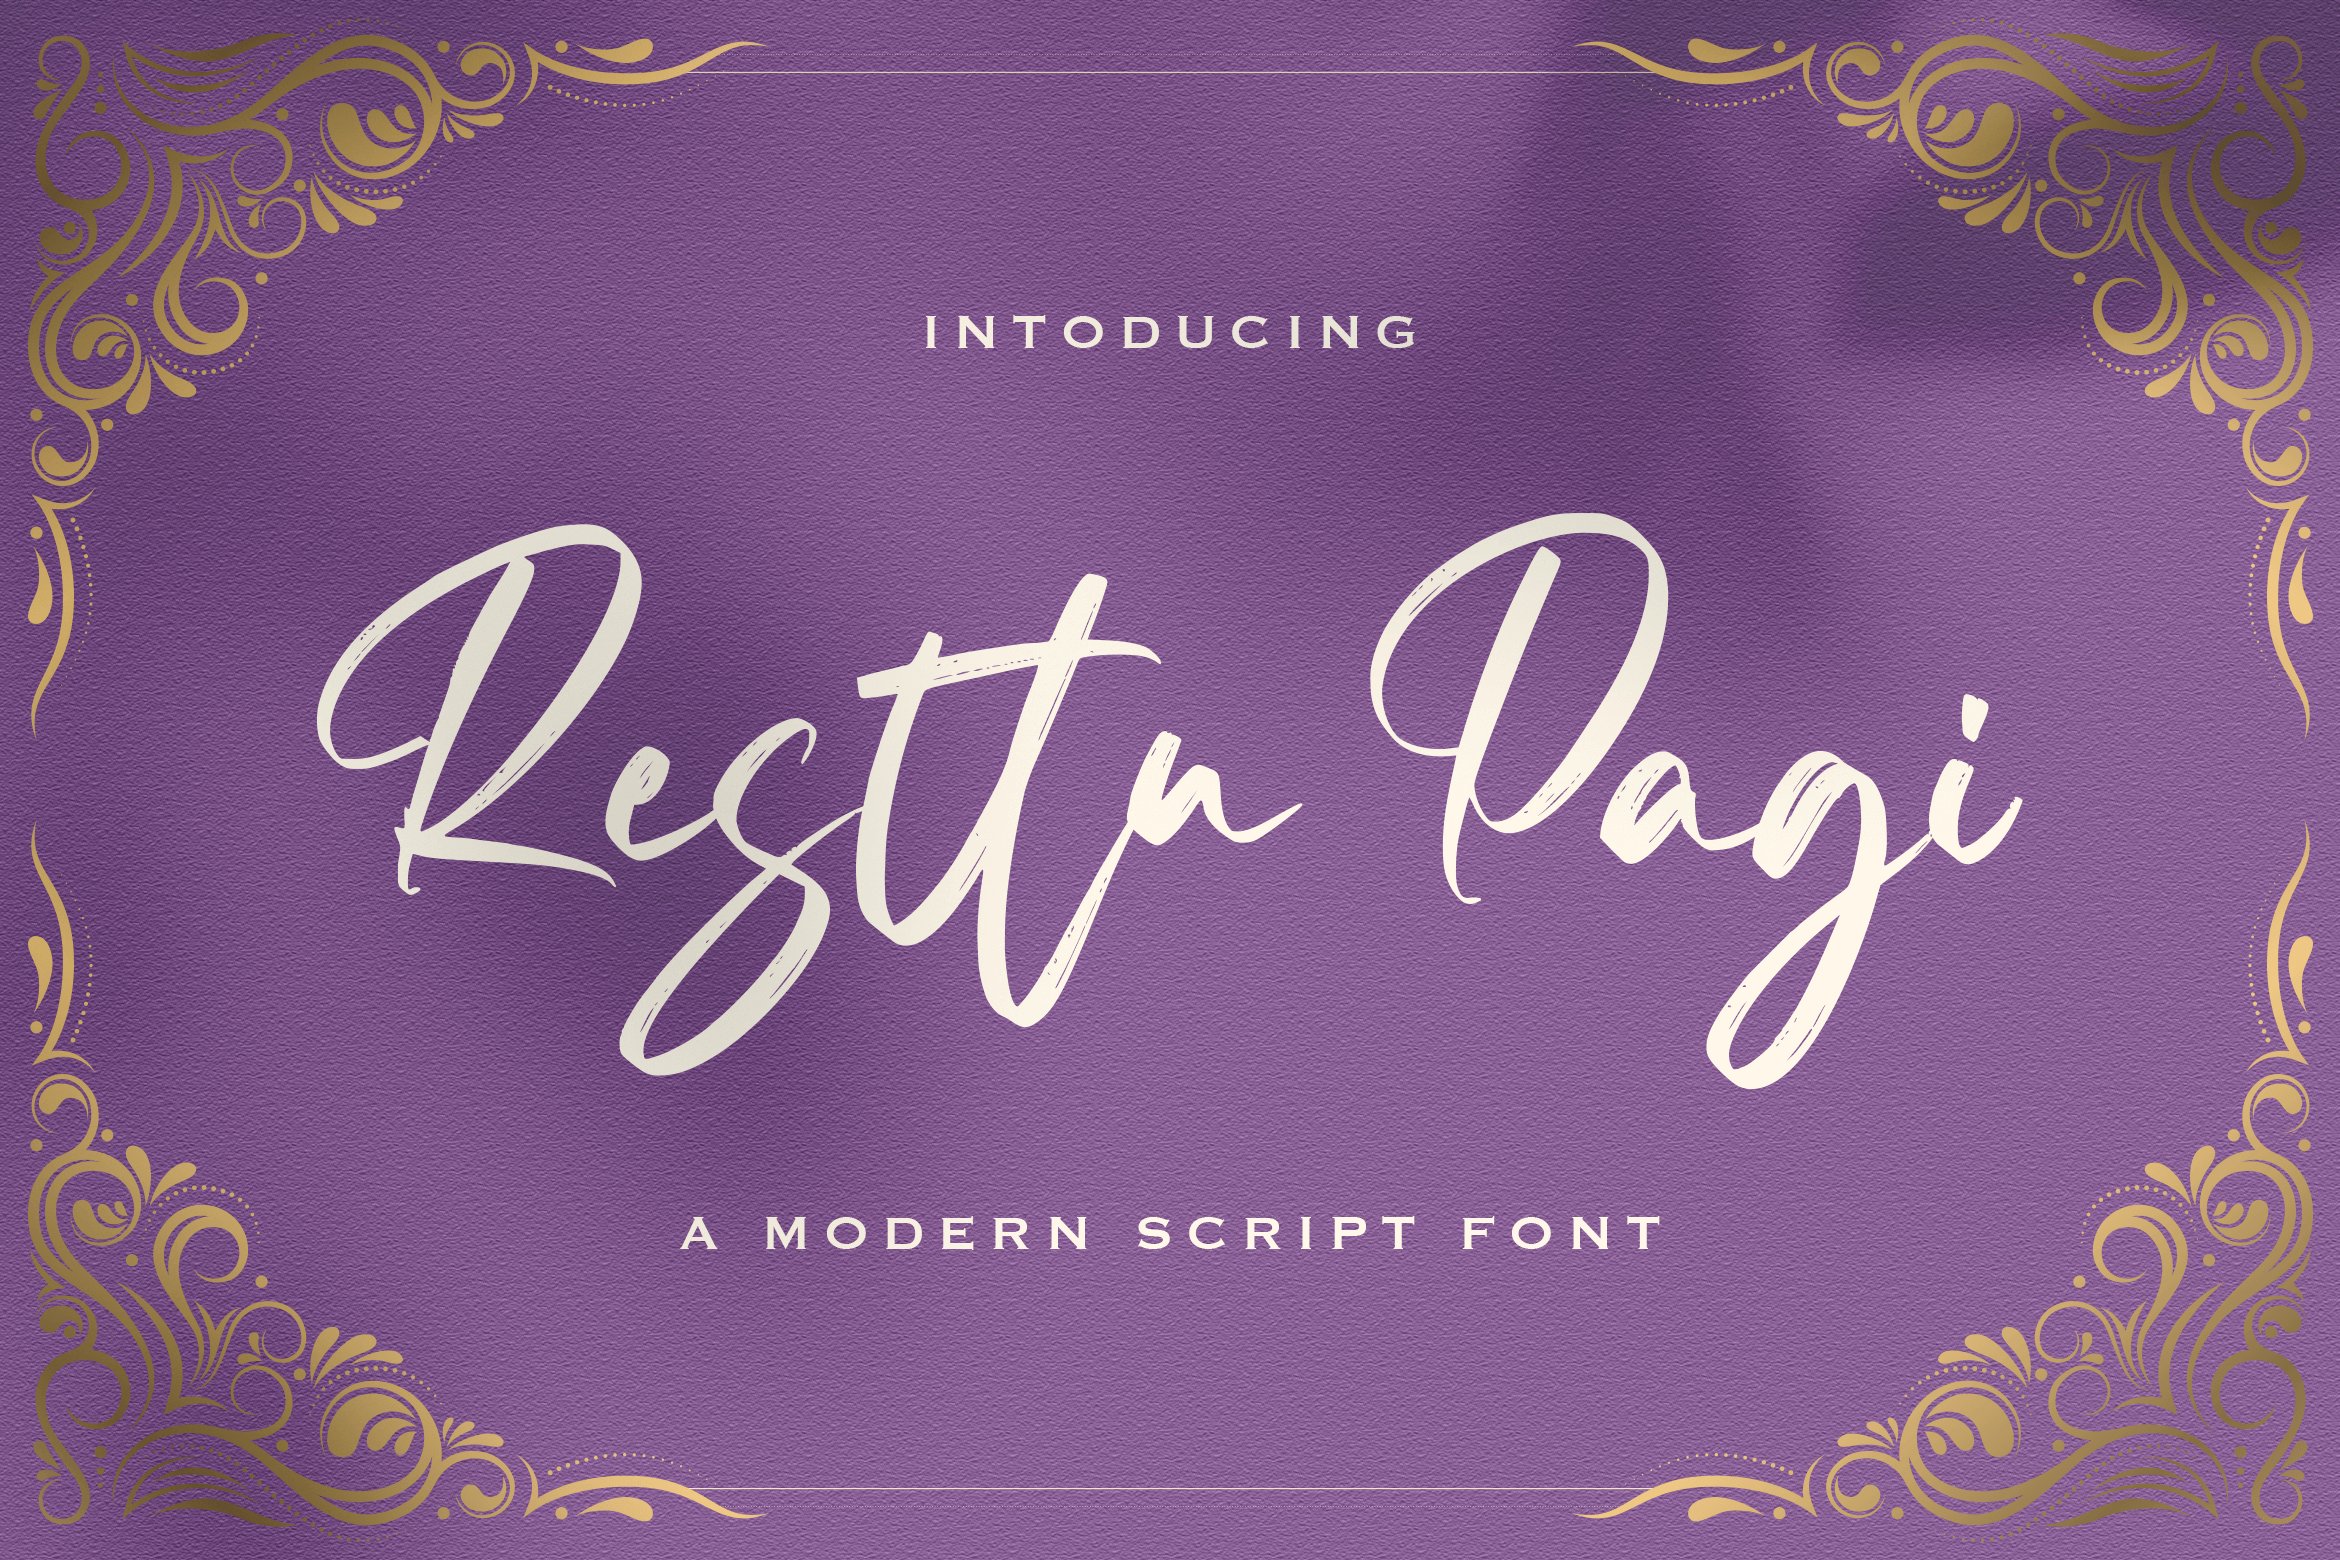 Resttu Pagi - Handwritten Font cover image.